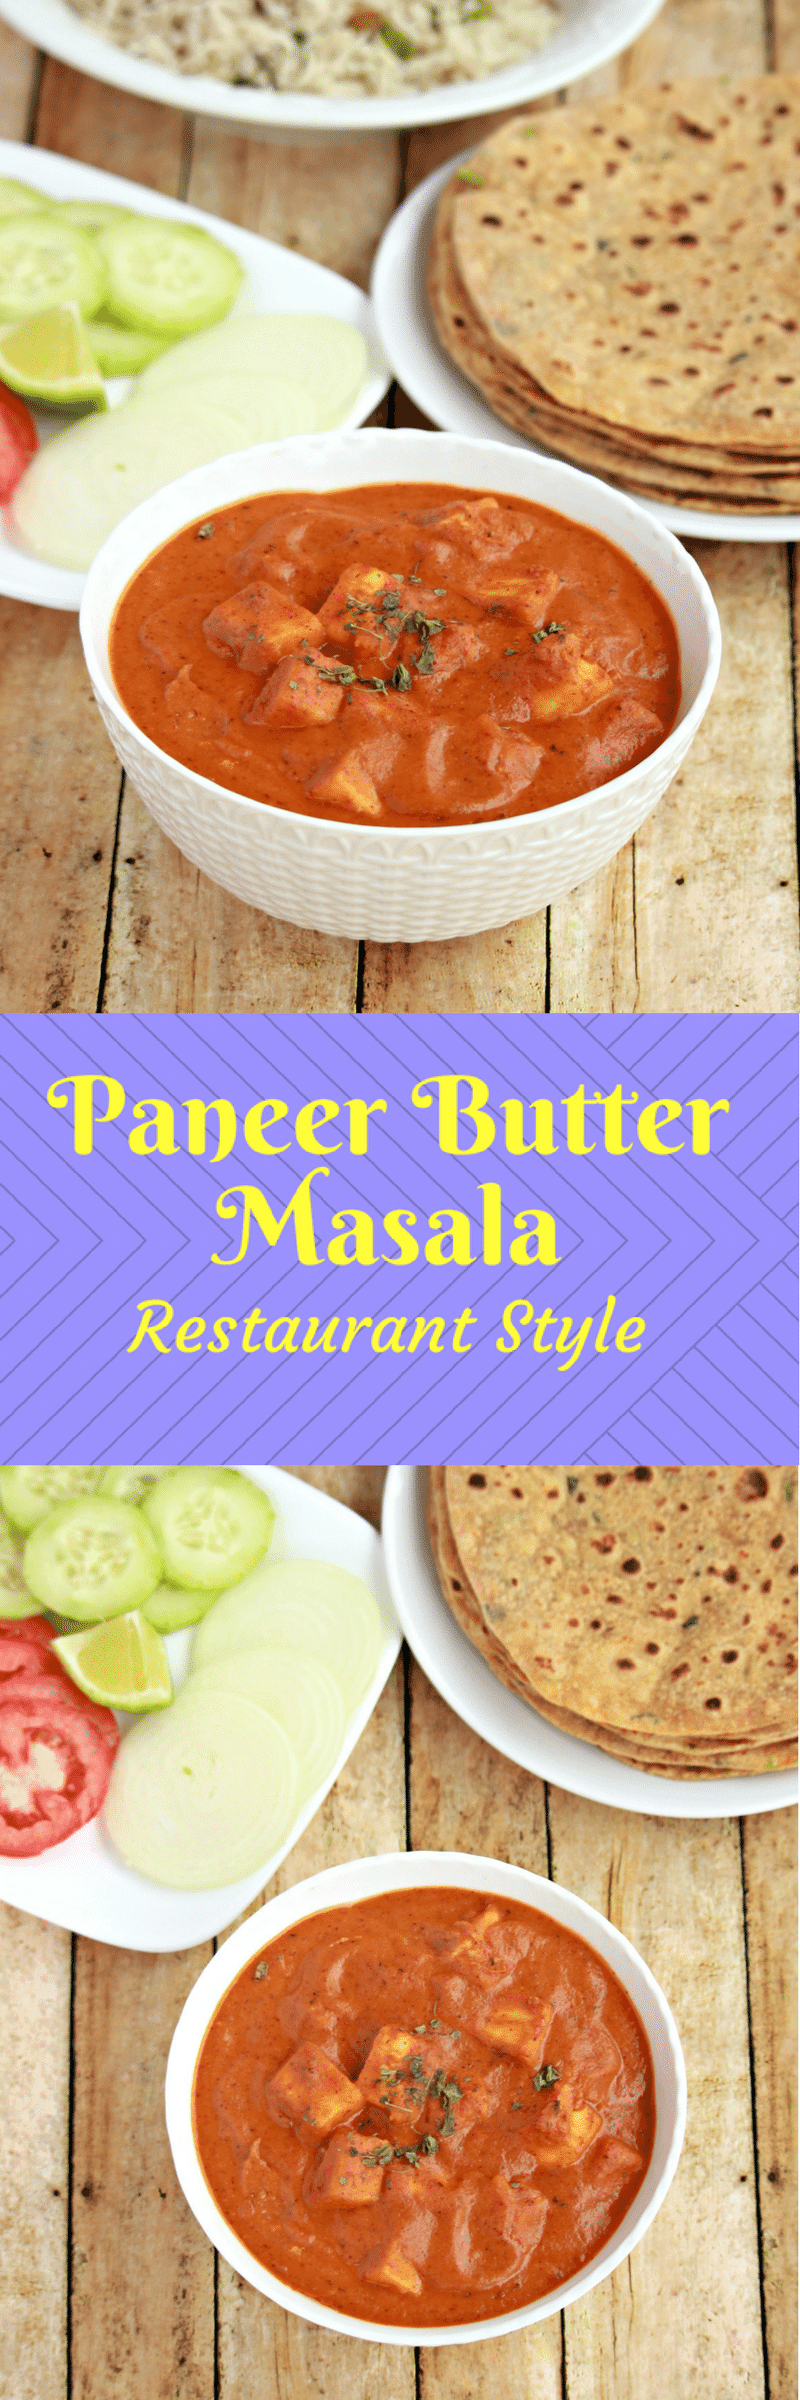 Restaurant Style Paneer Butter Masala